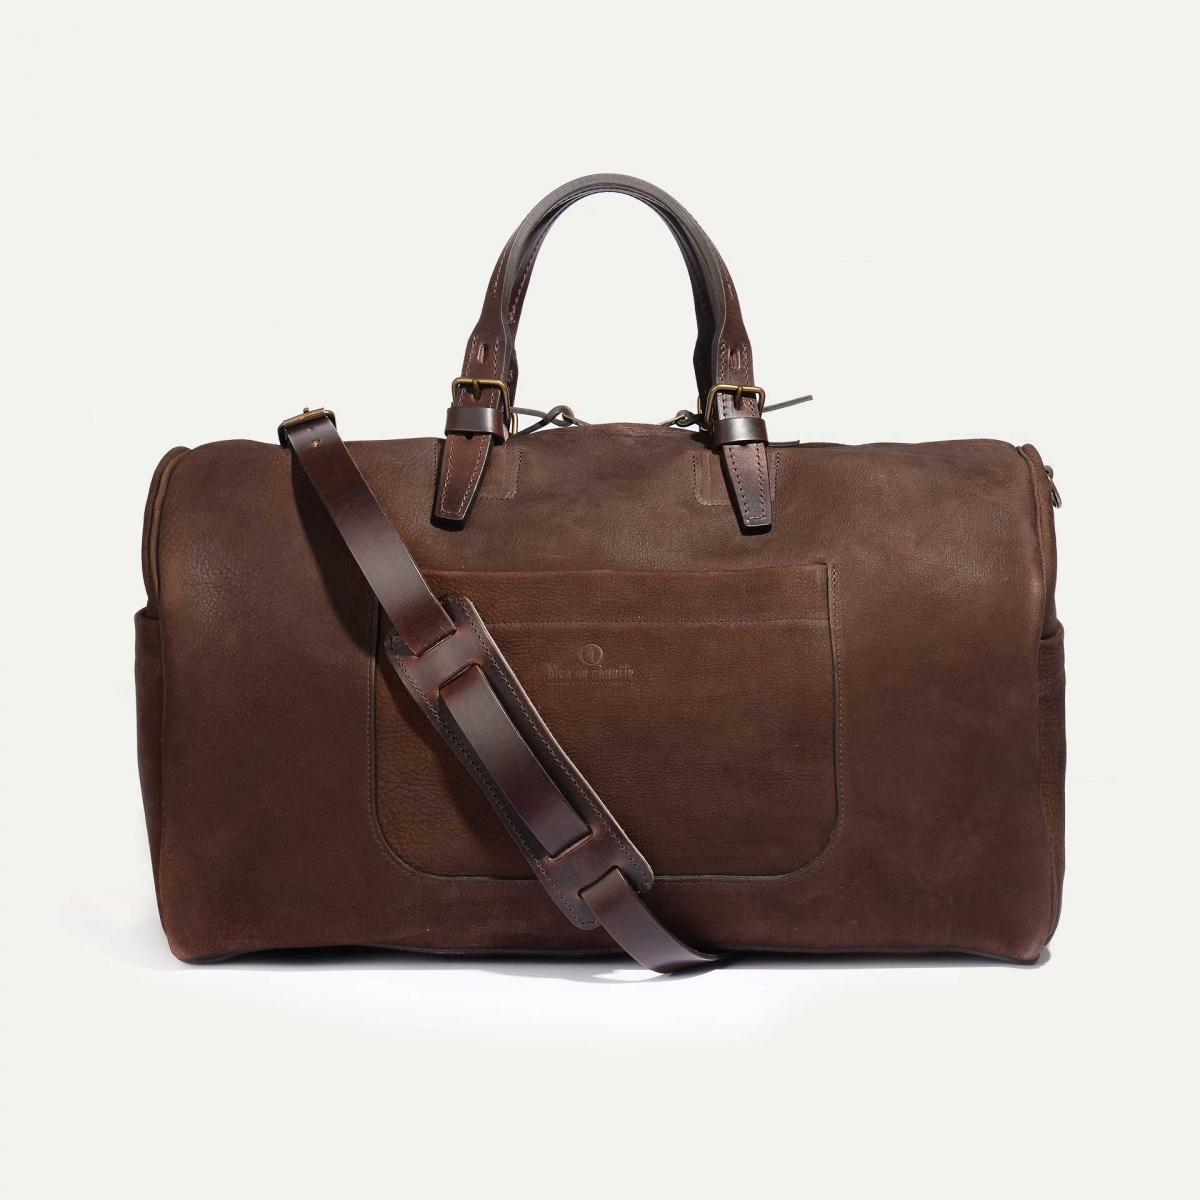 Hobo Travel bag - Coffee / Waxed Leather (image n°1)